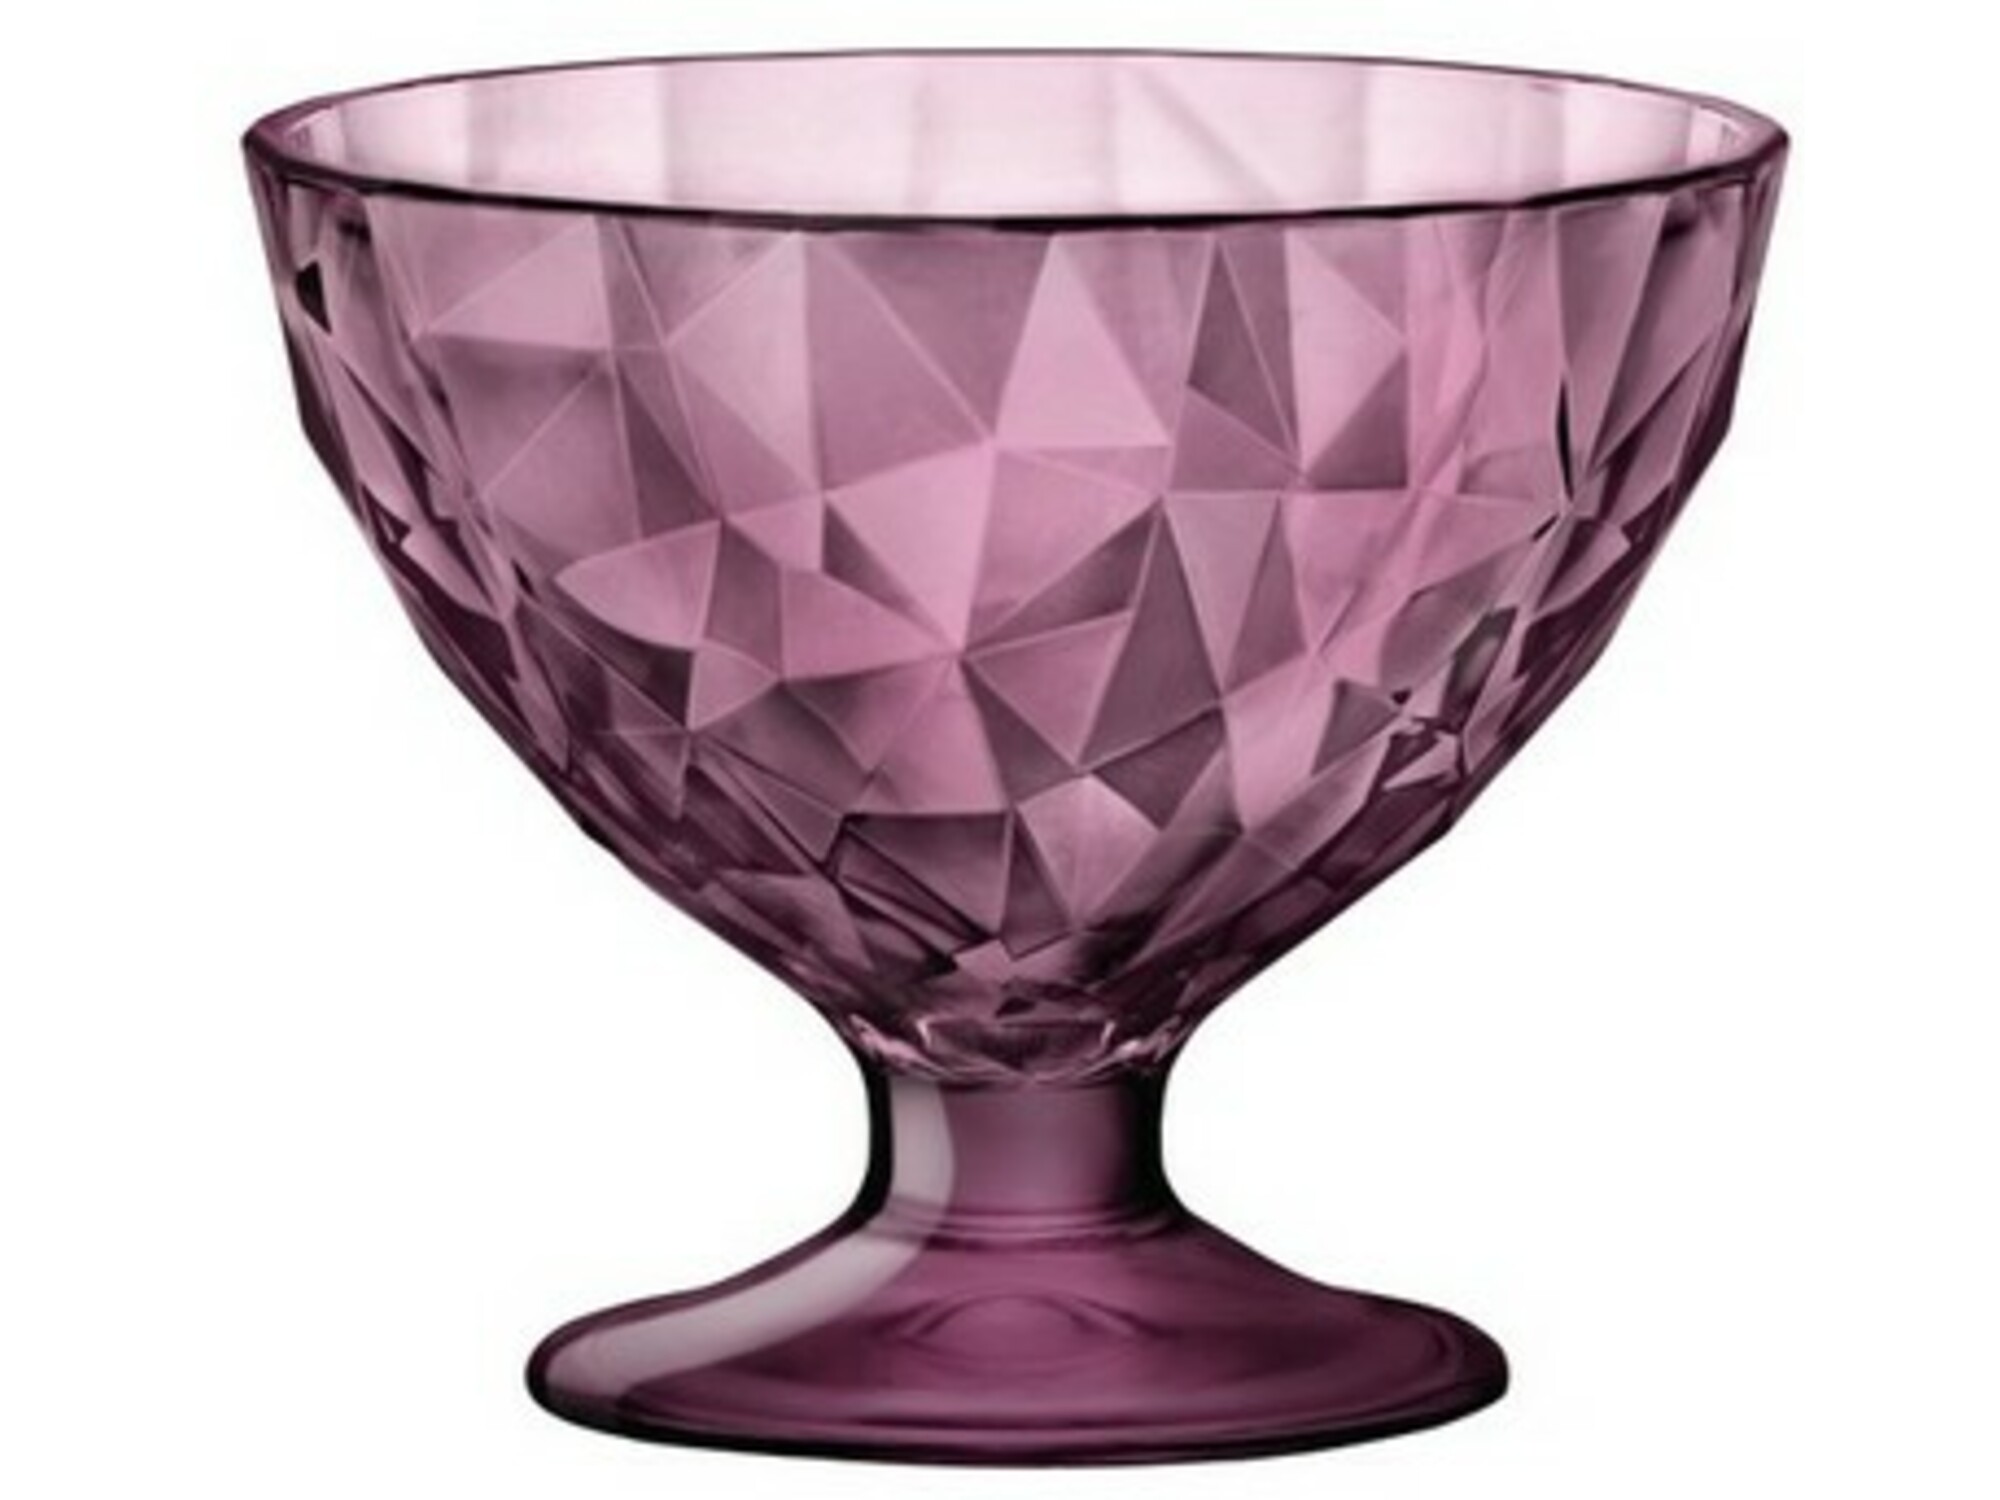 Bormioli Čaše za sladoled 1/1 Diamond jr Purple 23cl 302256